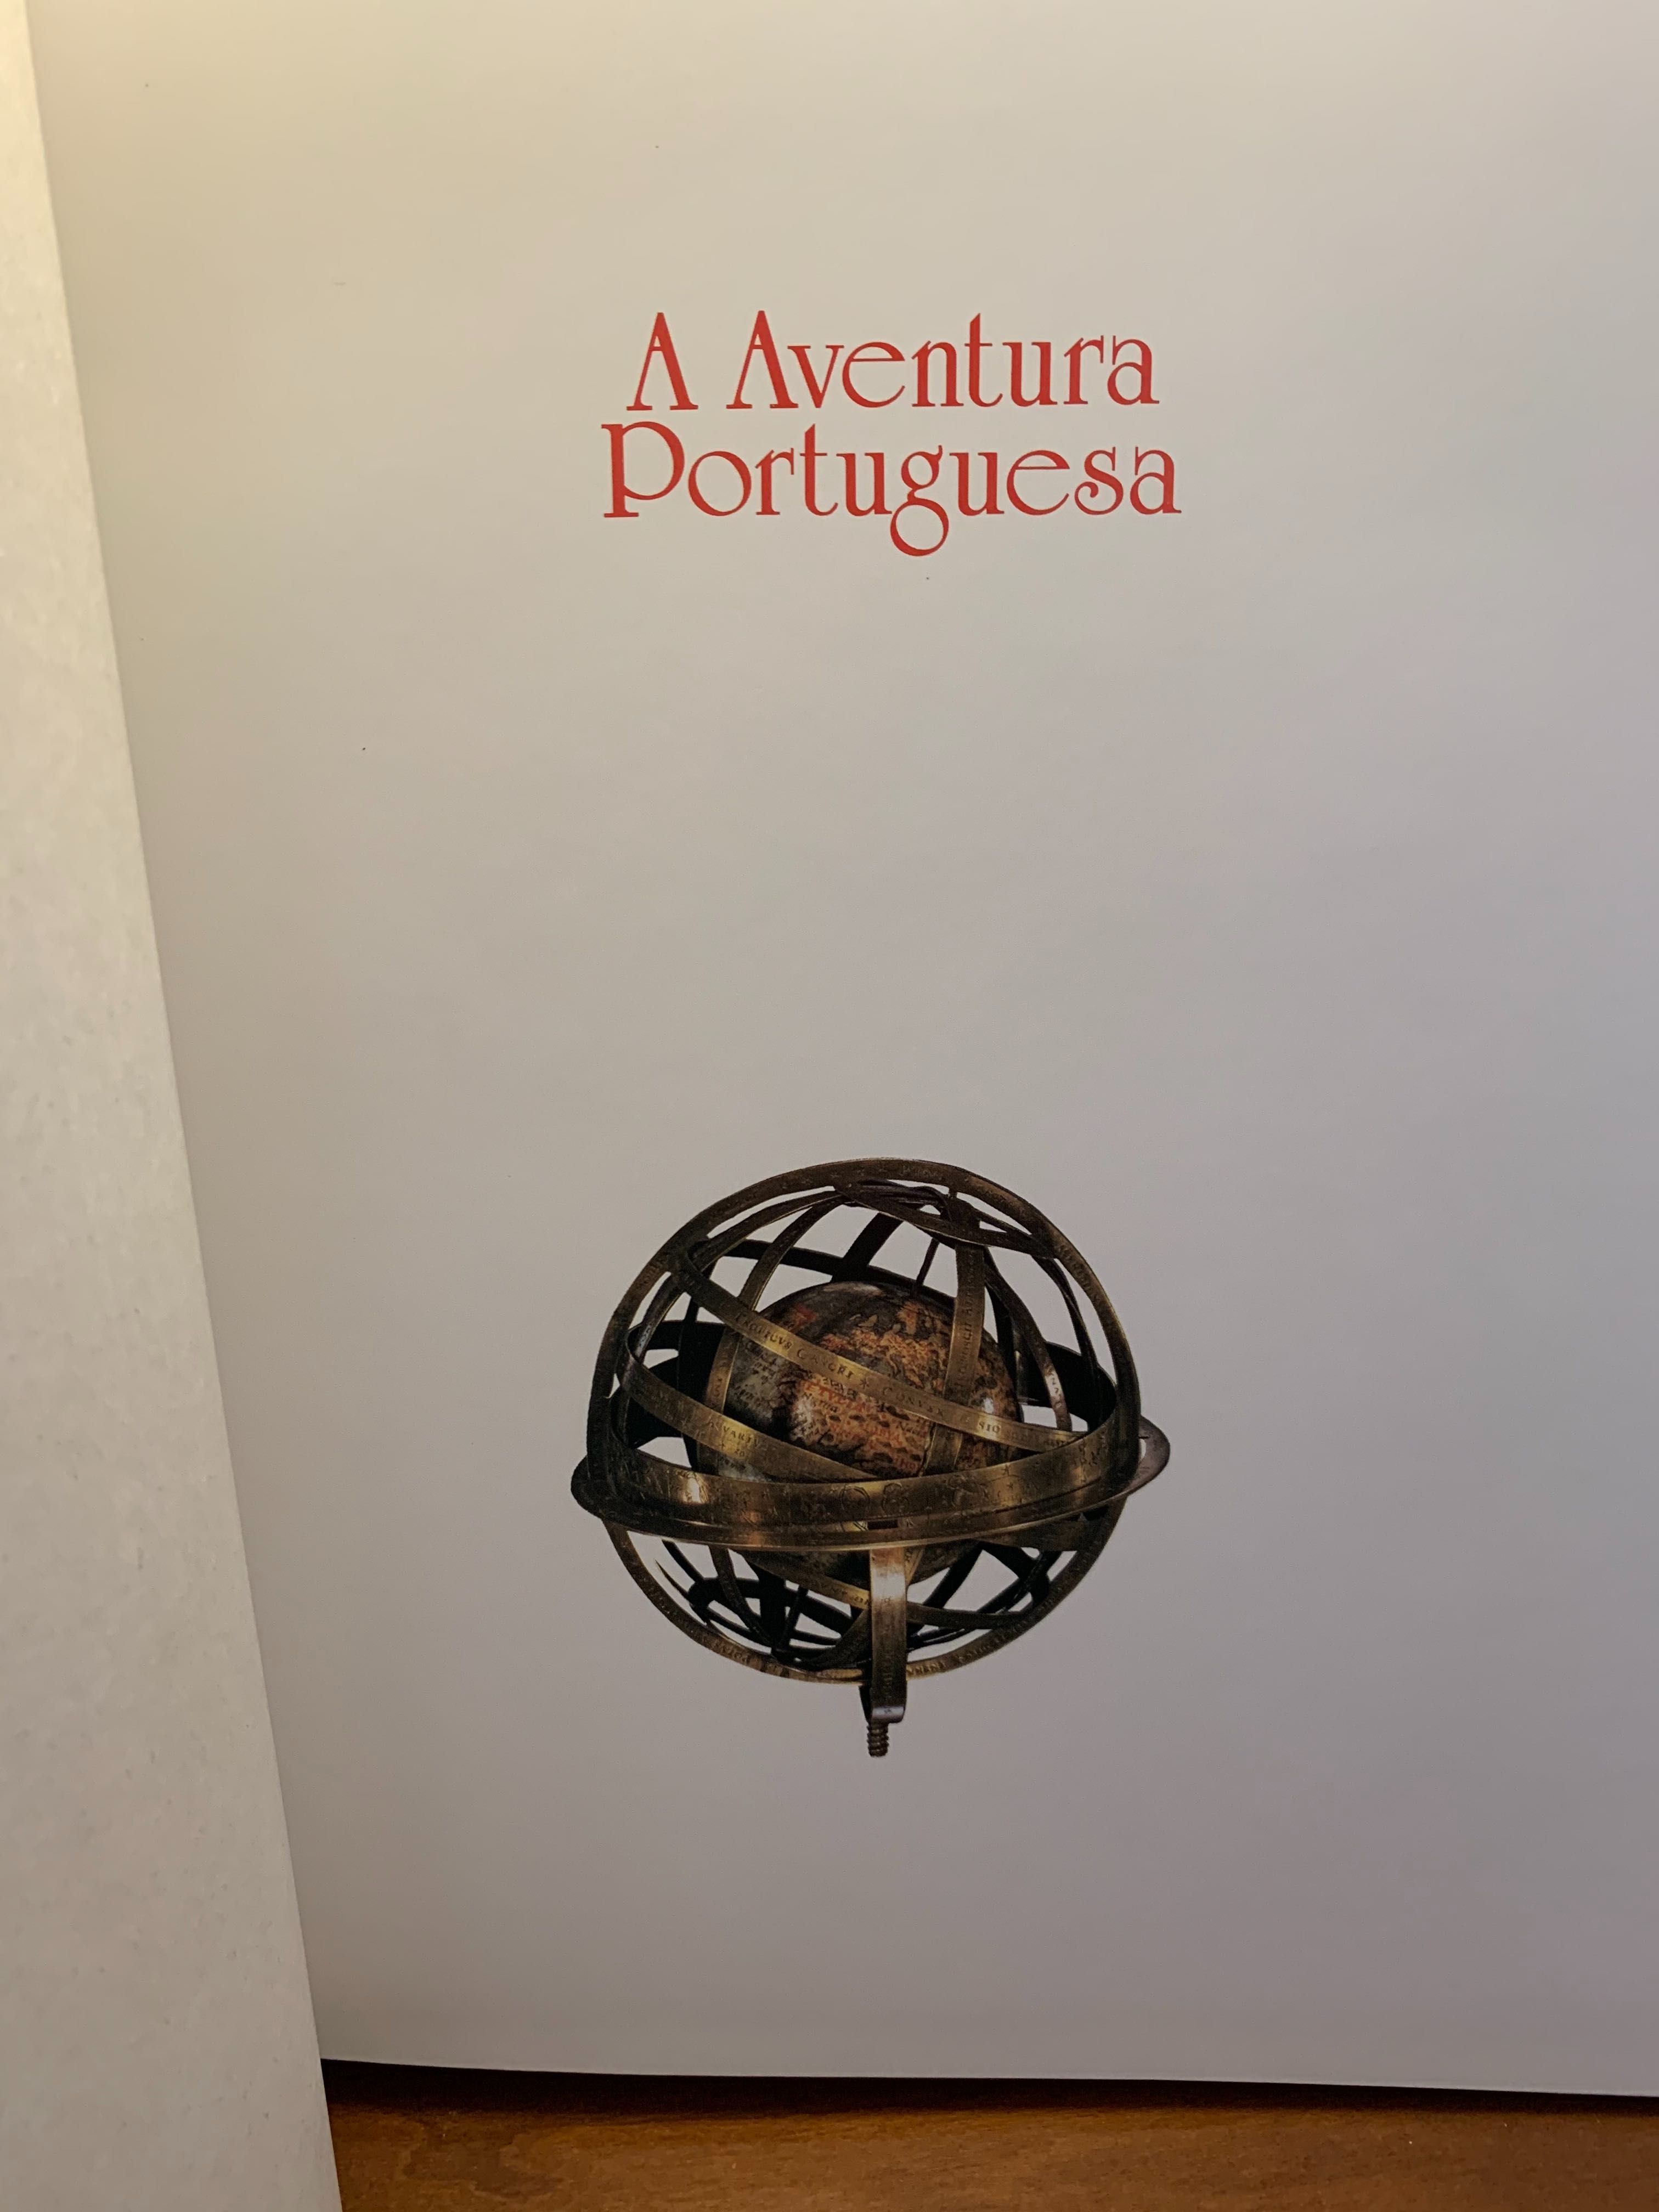 A Aventura Portuguesa
de Augusto Pereira Brandão e Michael Teague